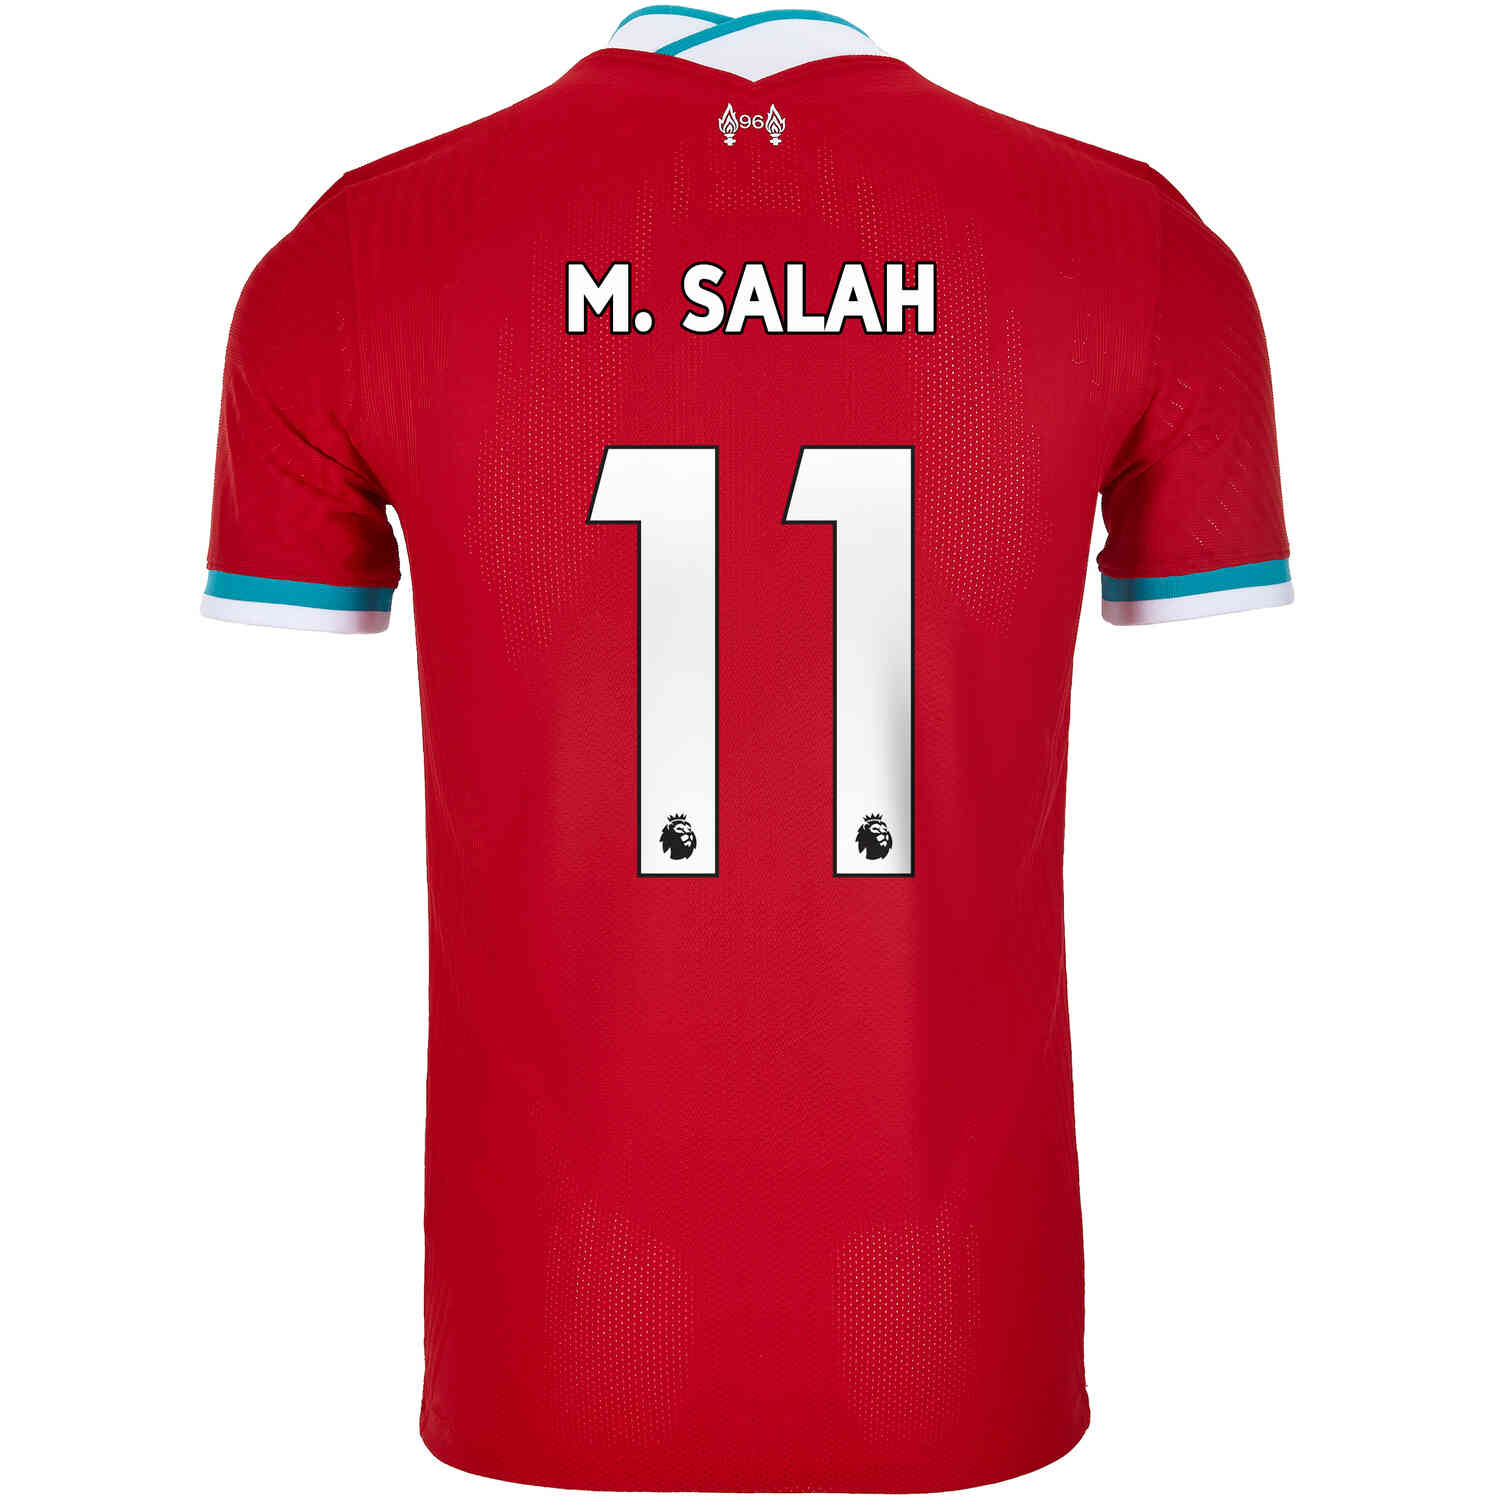 2020/21 Nike Mohamed Salah Liverpool Home Match Jersey - SoccerPro